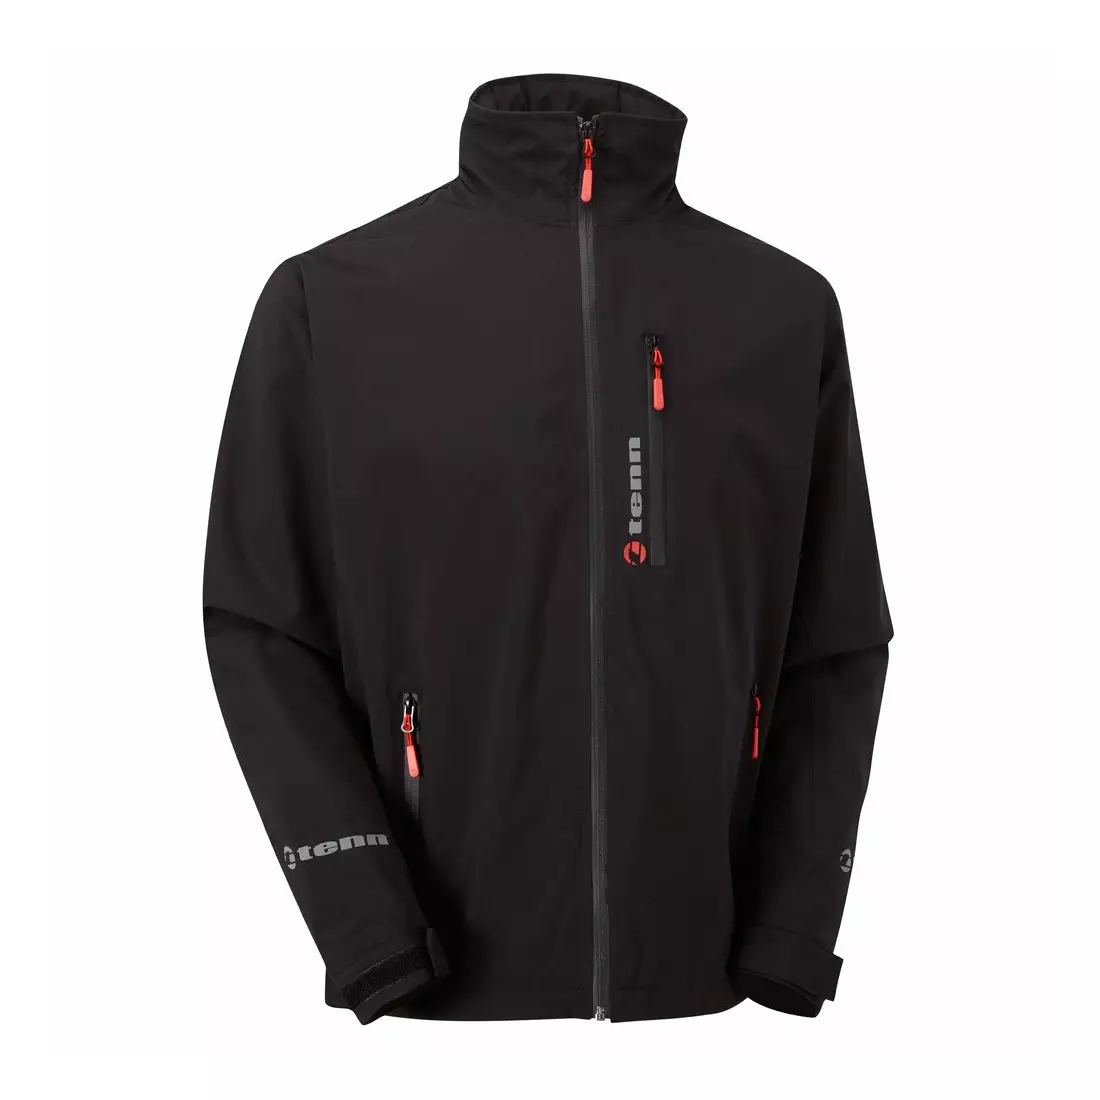 TENN OUTDOORS SWIFT rainproof cycling jacket with hood, black